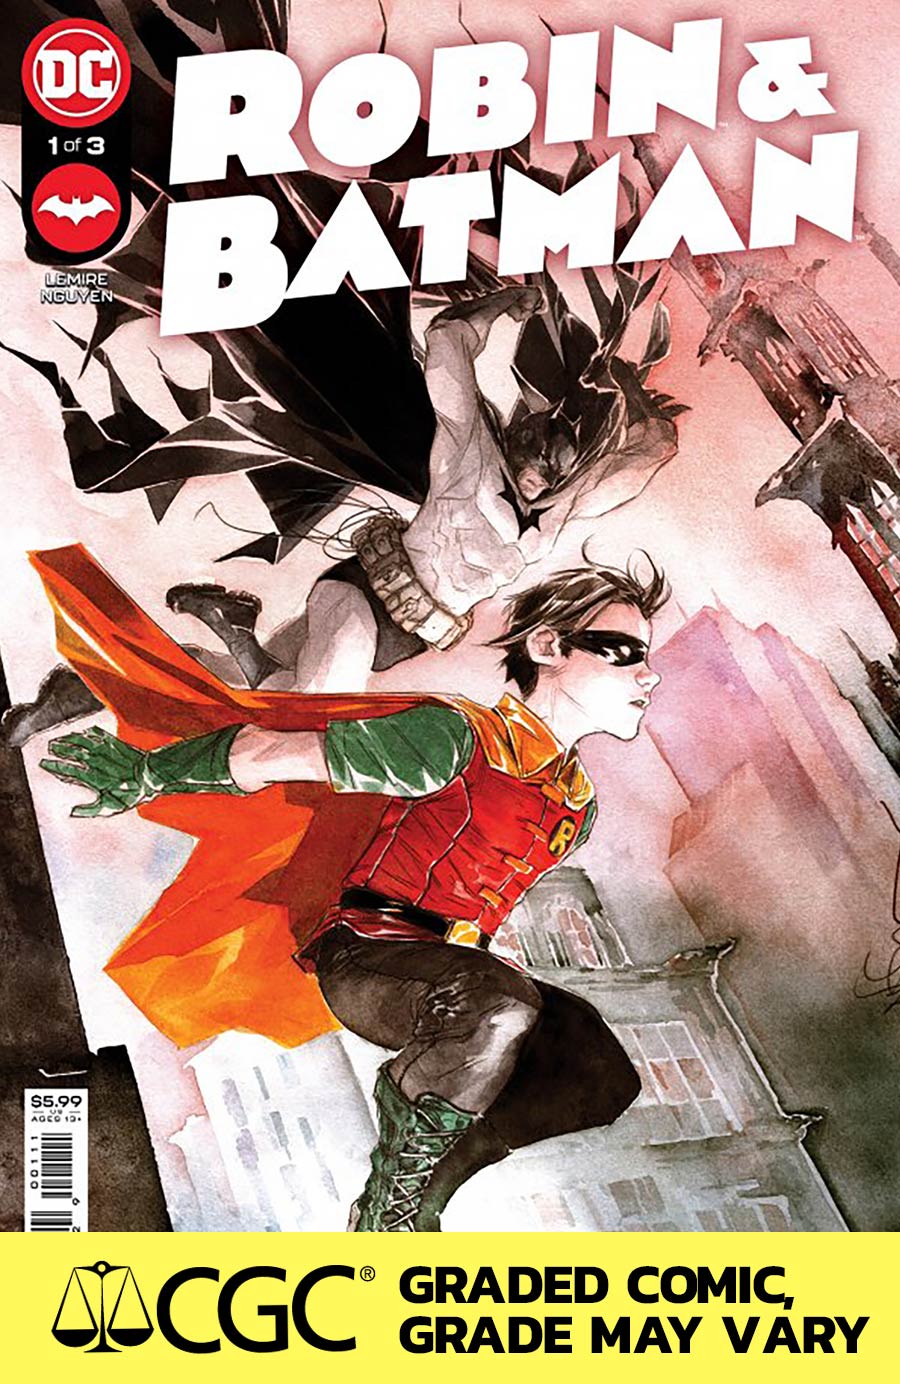 Robin & Batman #1 Cover E DF CGC Graded 9.6 Or Higher